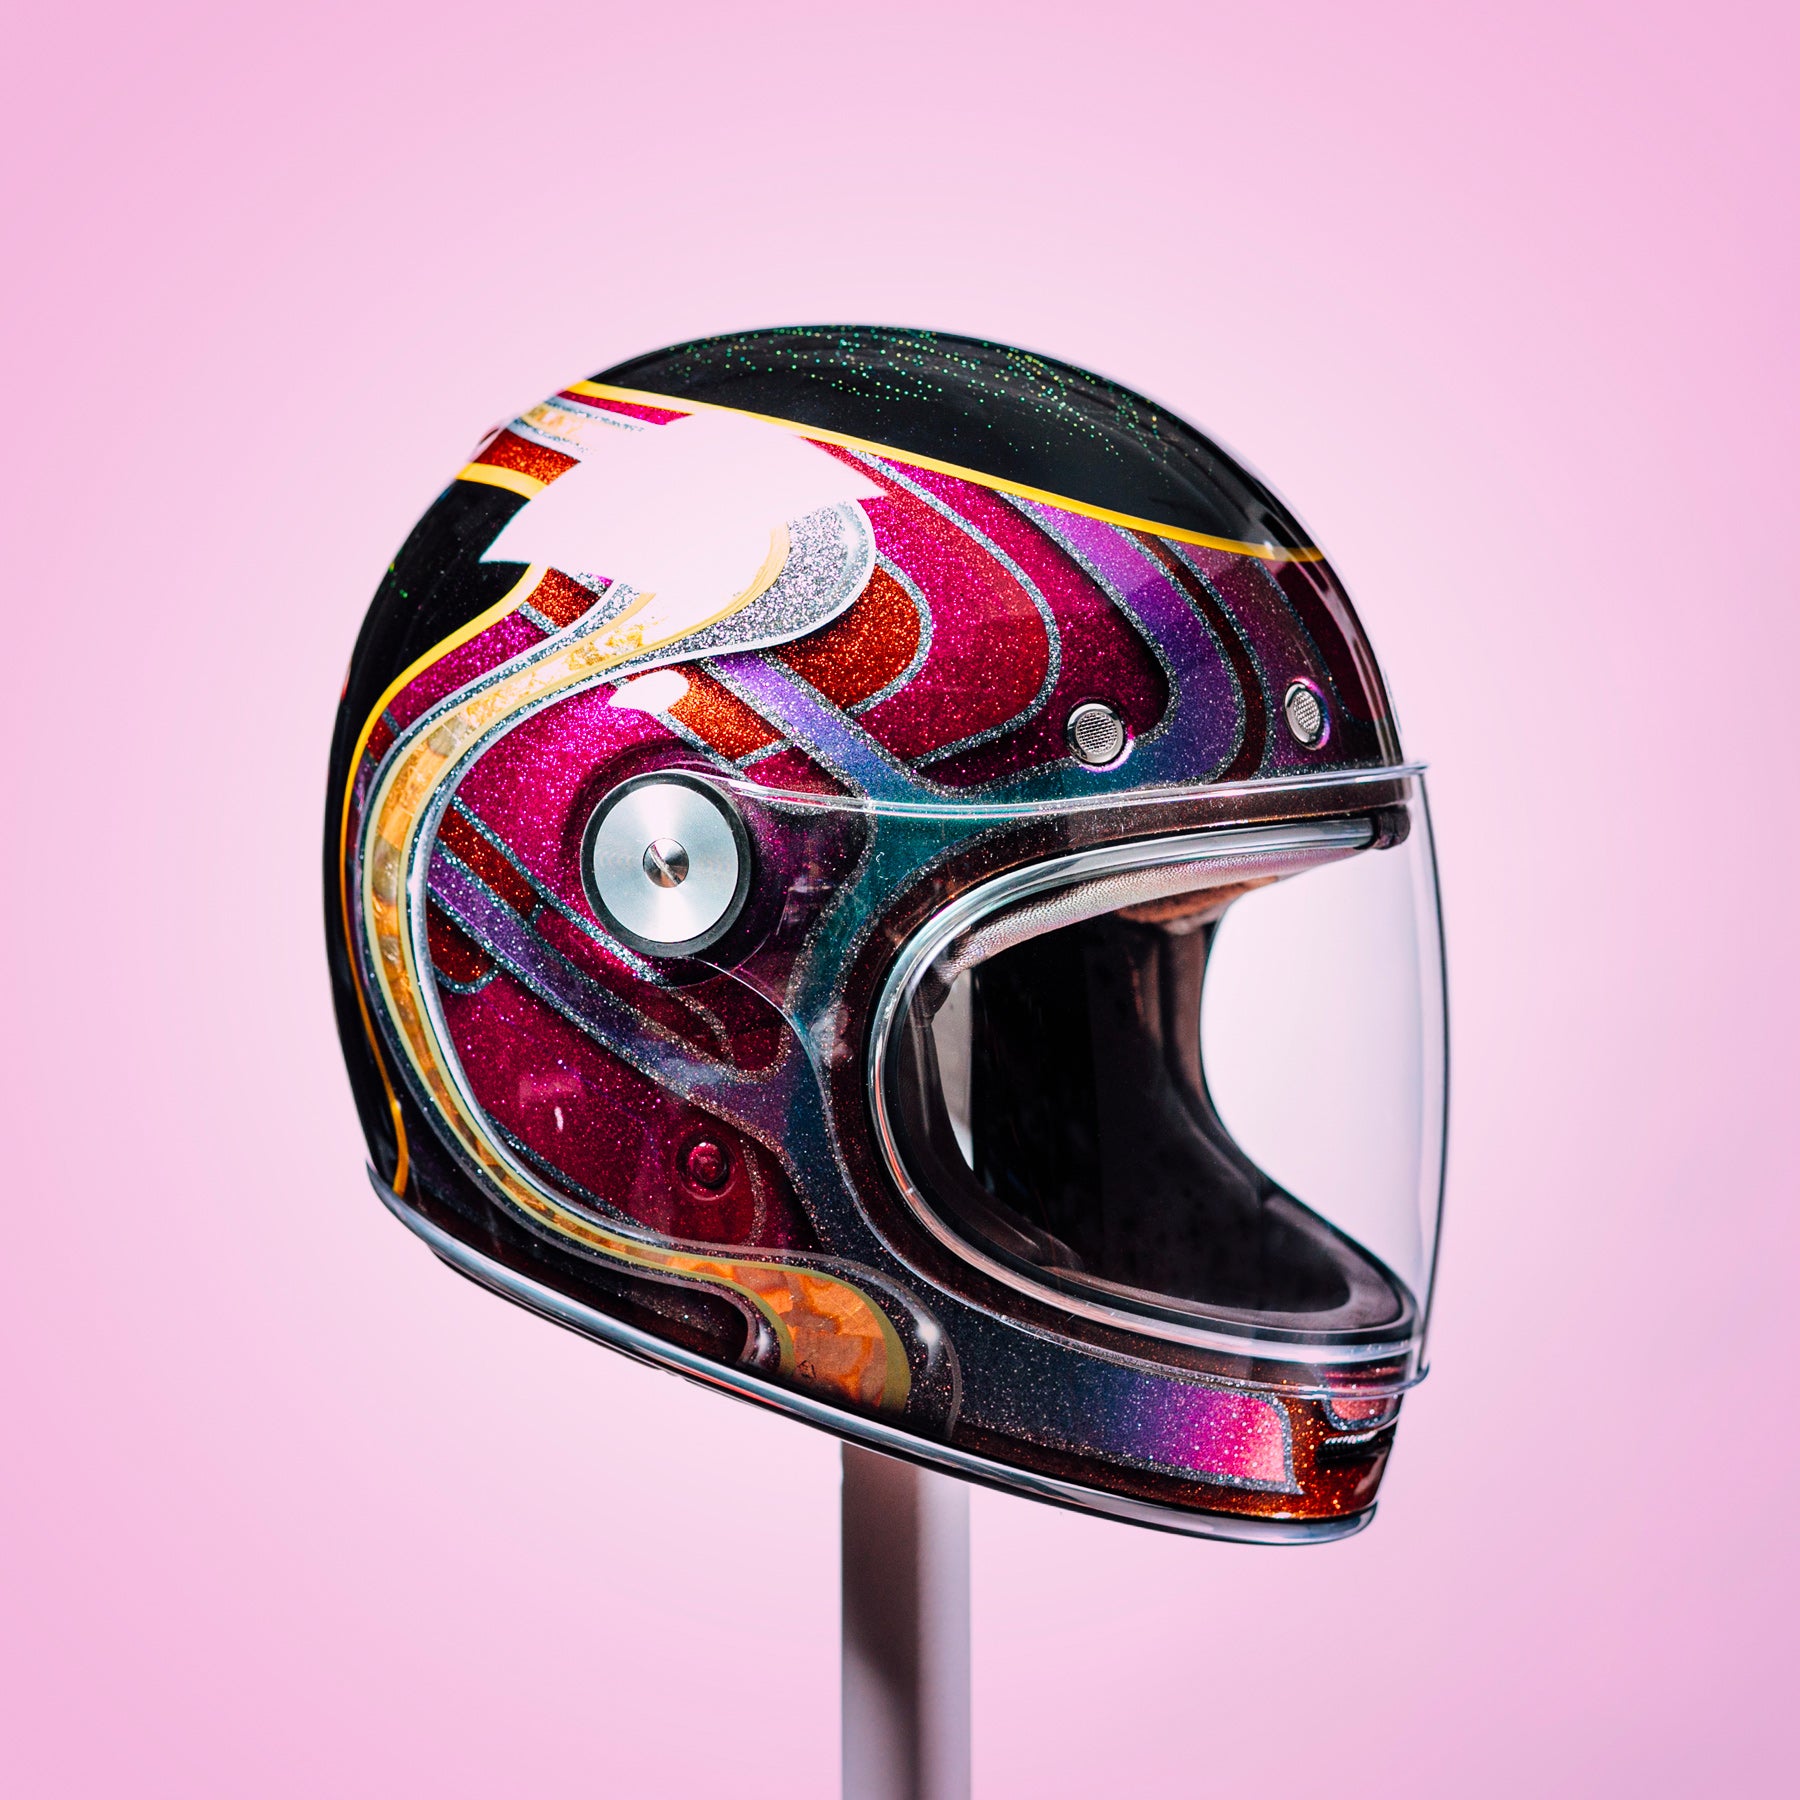 Trippy Ten helmet art show Pittsburgh Glory Daze motorcycle show Kurt Alexa Diserio Bell Helmets Andy Meeh